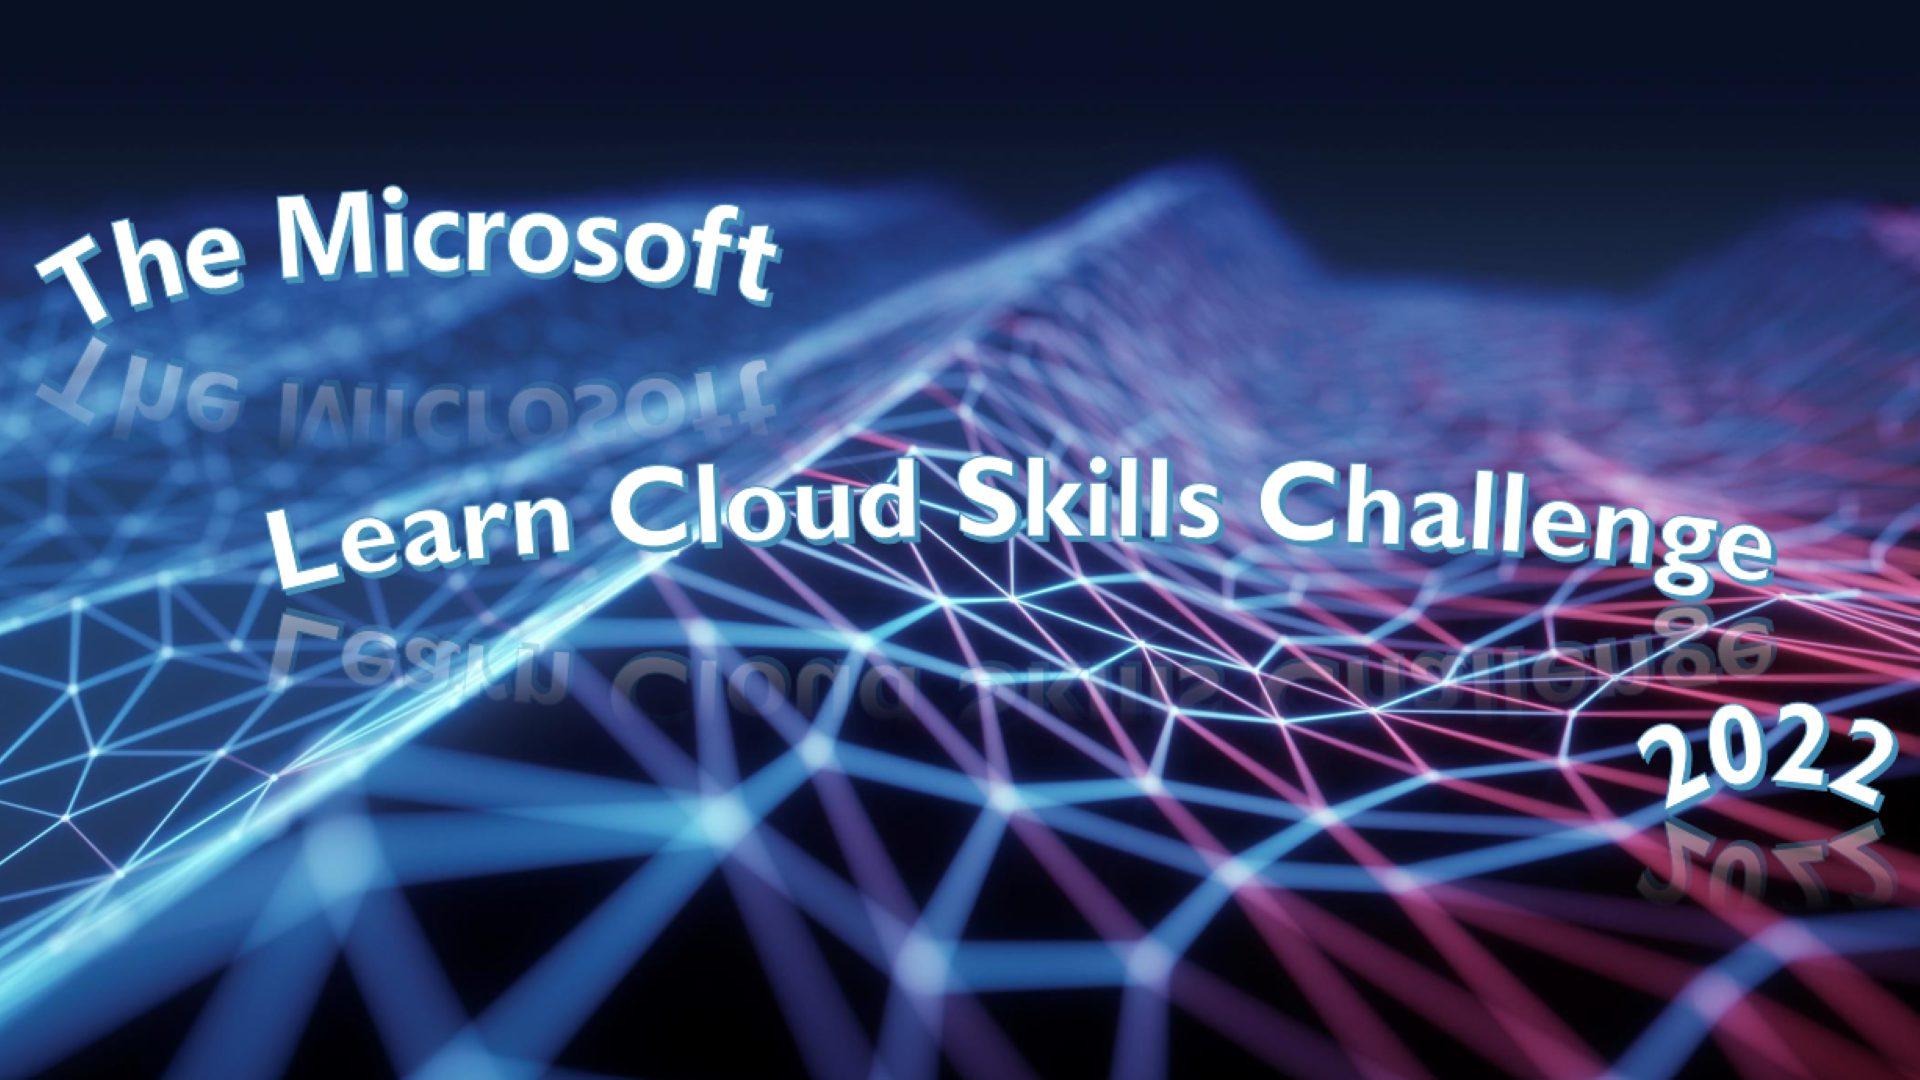 azblob://2022/11/11/eyecatch/2022-10-12-the-microsoft-learn-cloud-skills-challenge-000.jpg